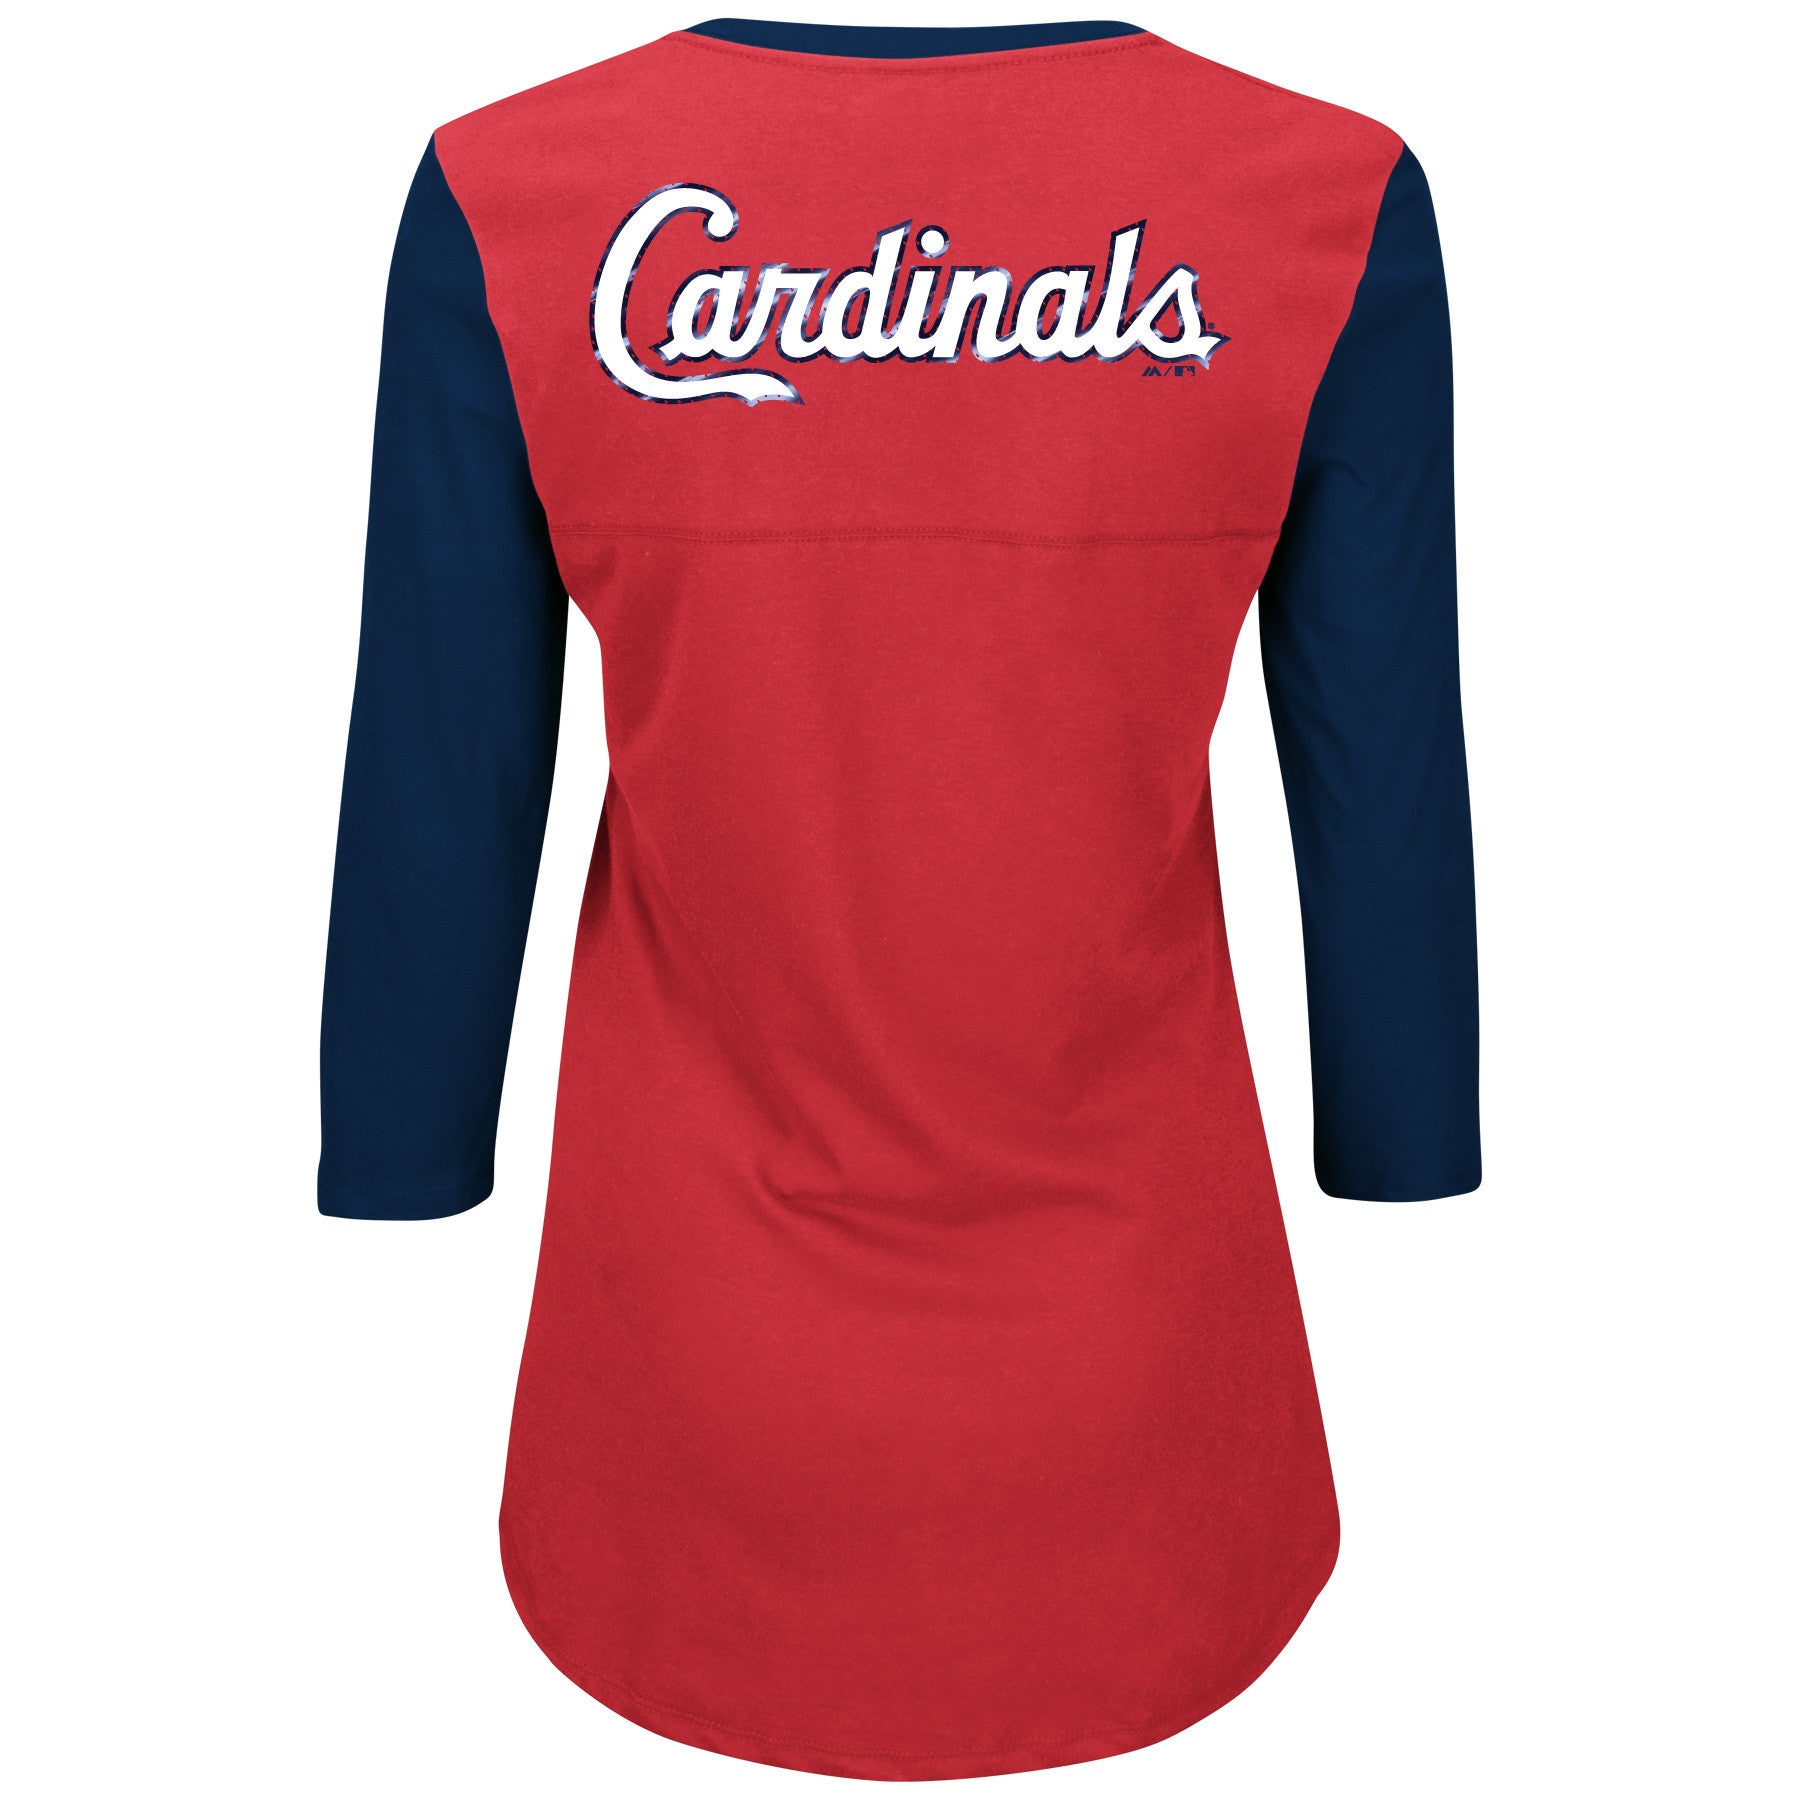 St. Louis Cardinals Red & White Womens/Girls Baseball Jersey